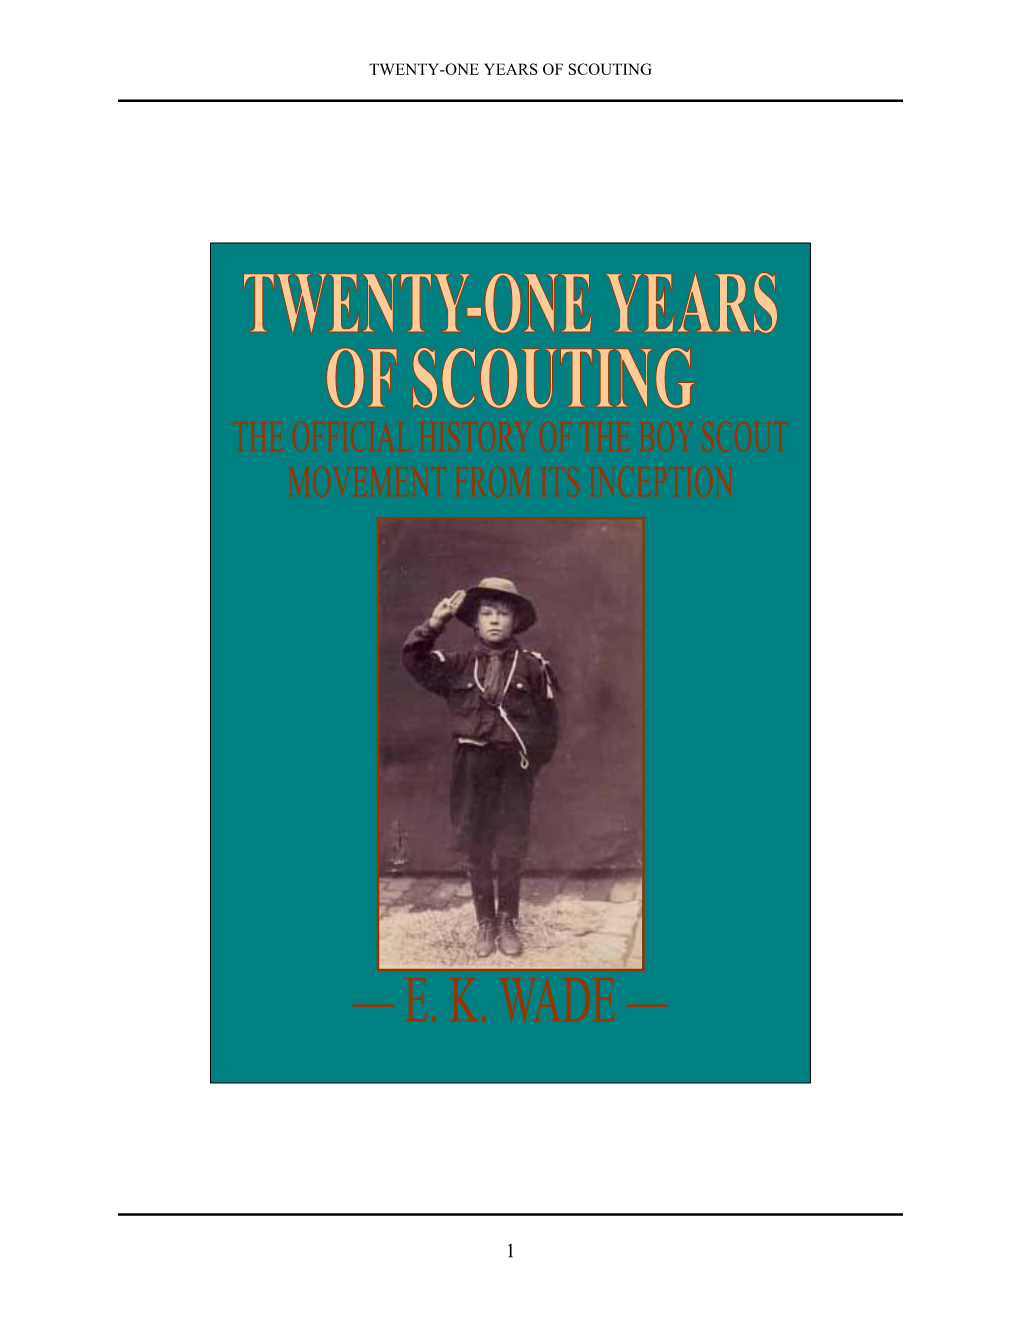 Twenty-One Years of Scouting